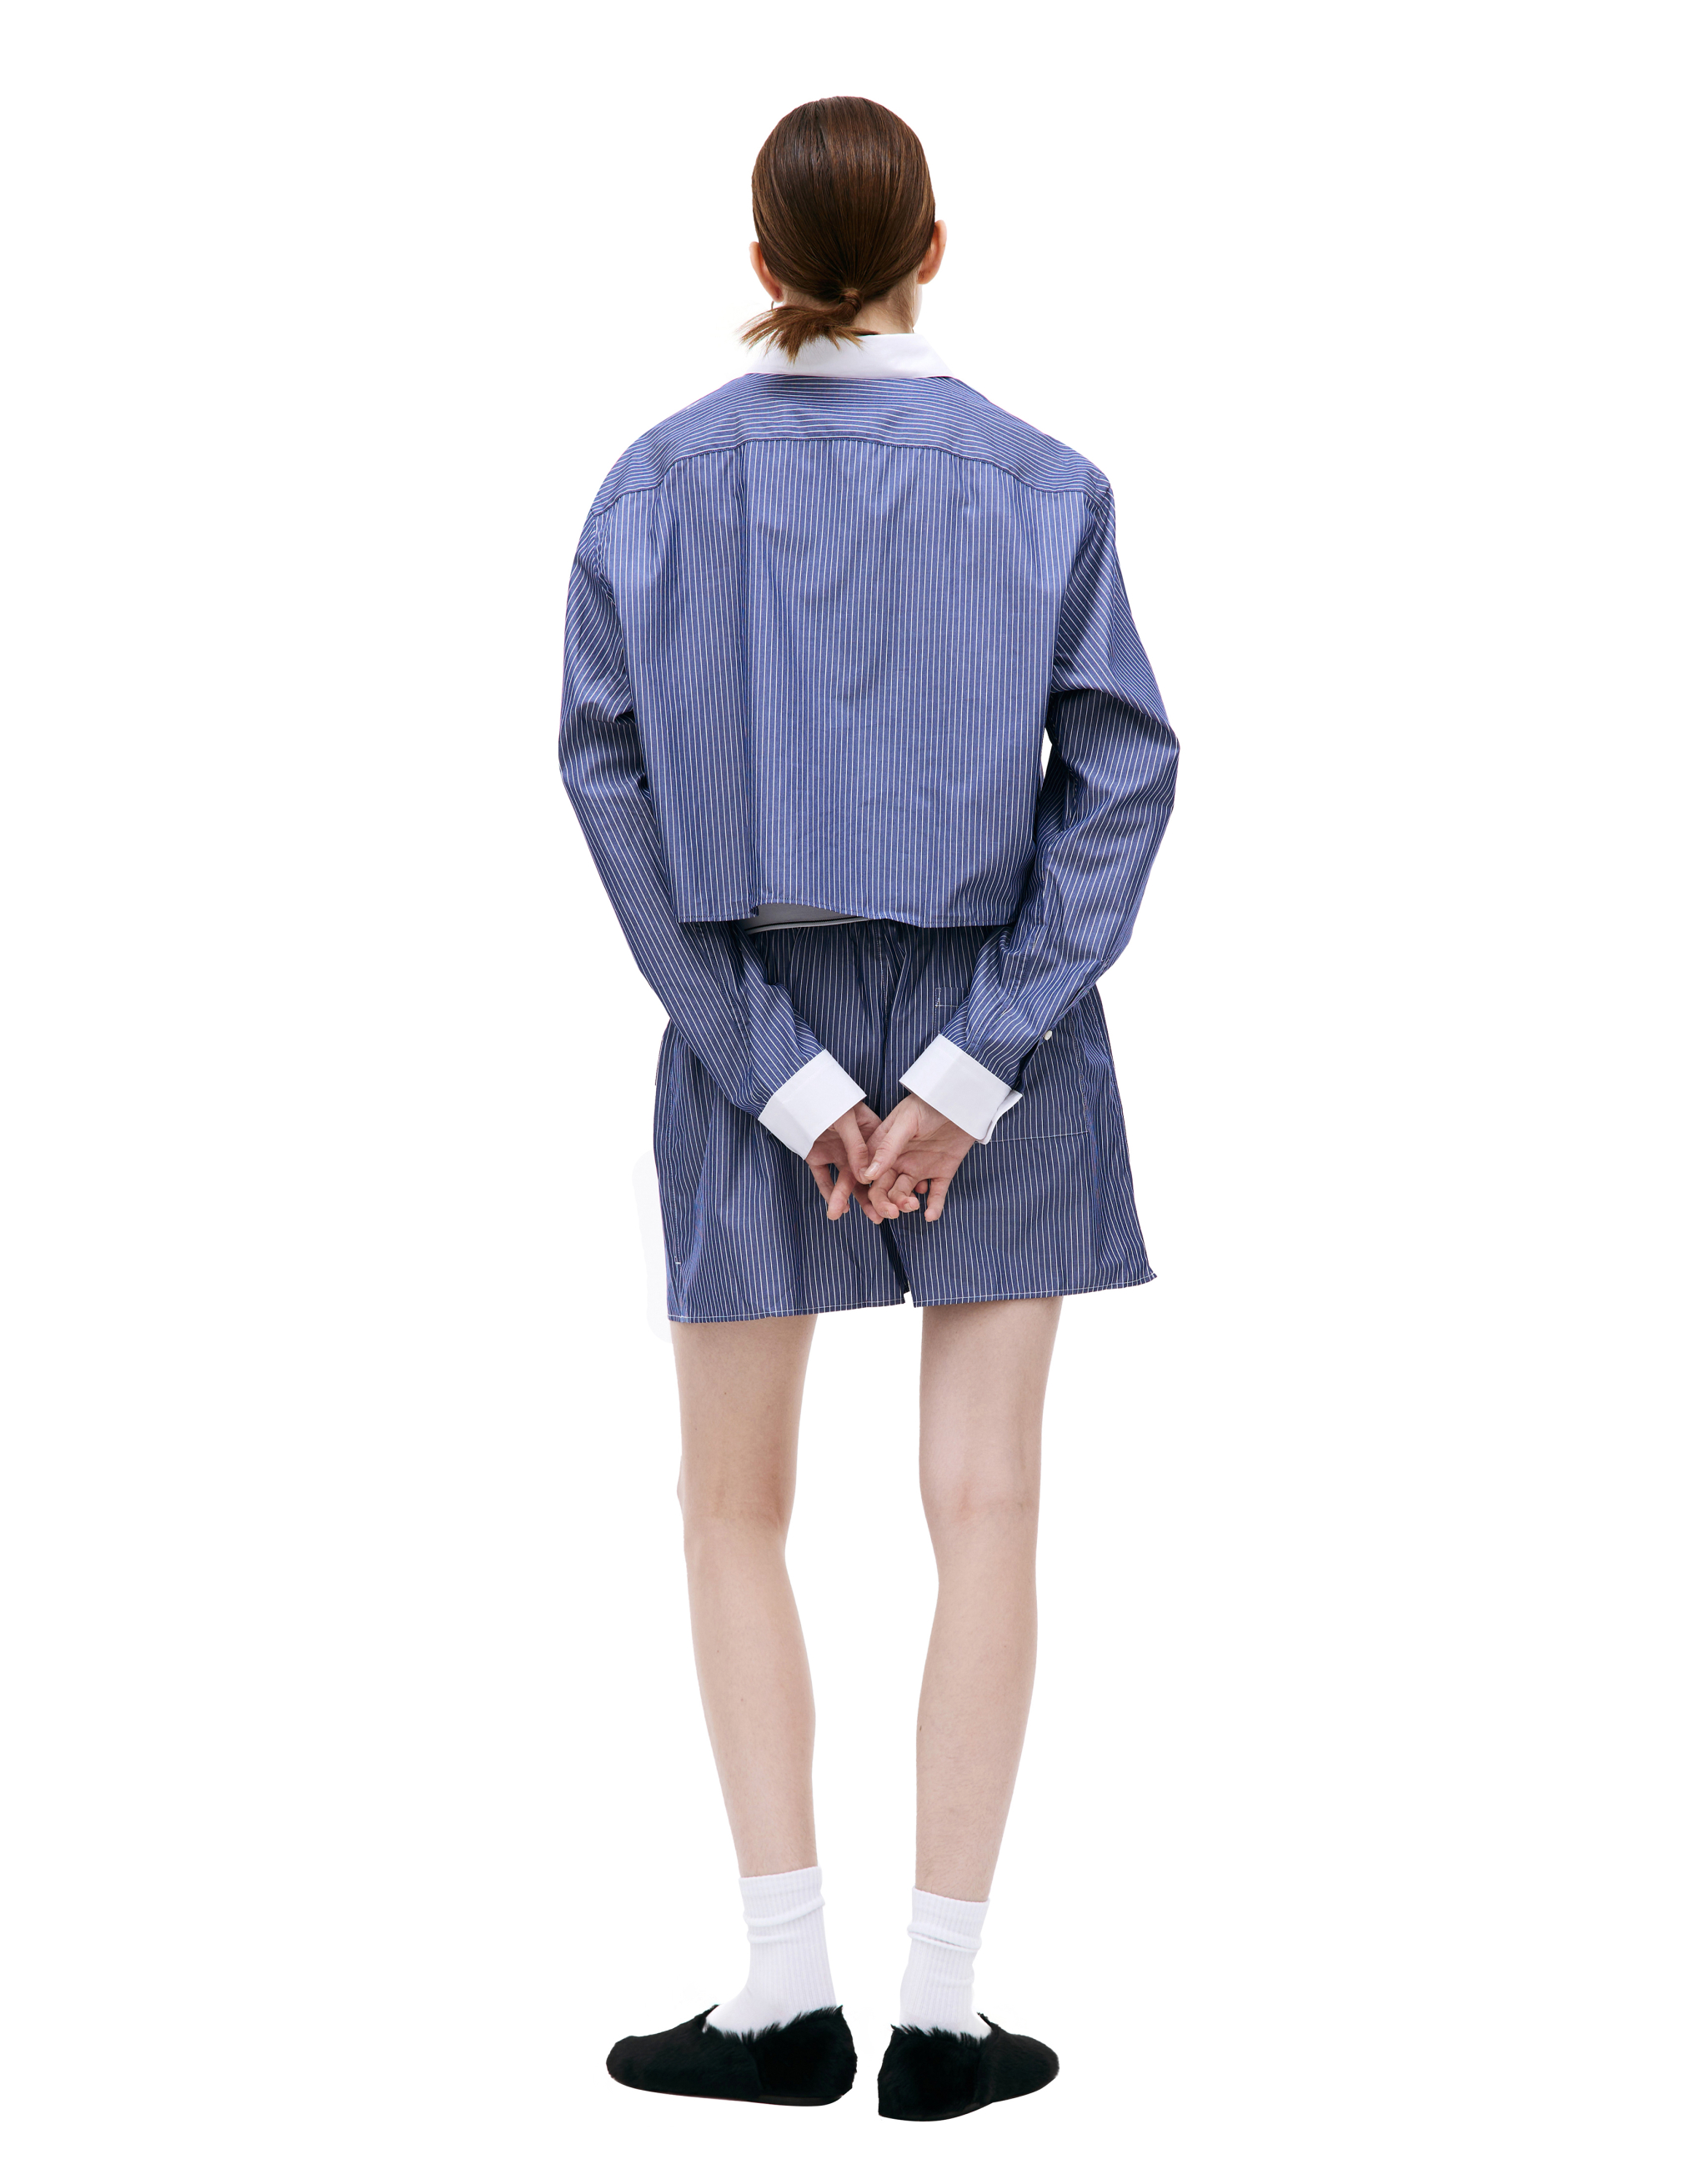 Хлопковые шорты на резинке SPORTY & RICH BOAW233BS, размер S;M;L;XL - фото 3